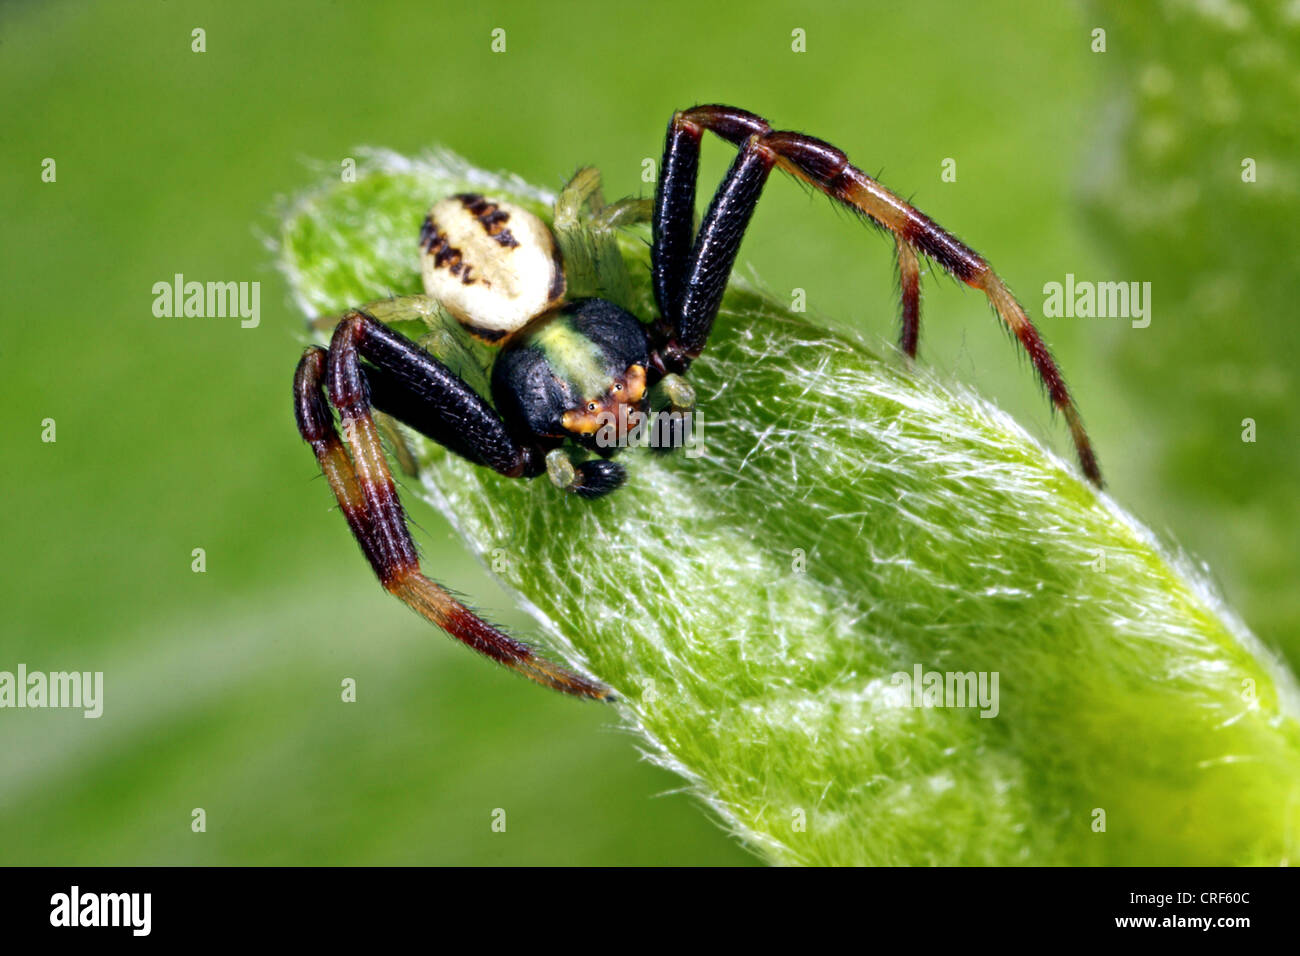 goldenrod crab spider (Misumena vatia), male sitting on a leaf Stock Photo